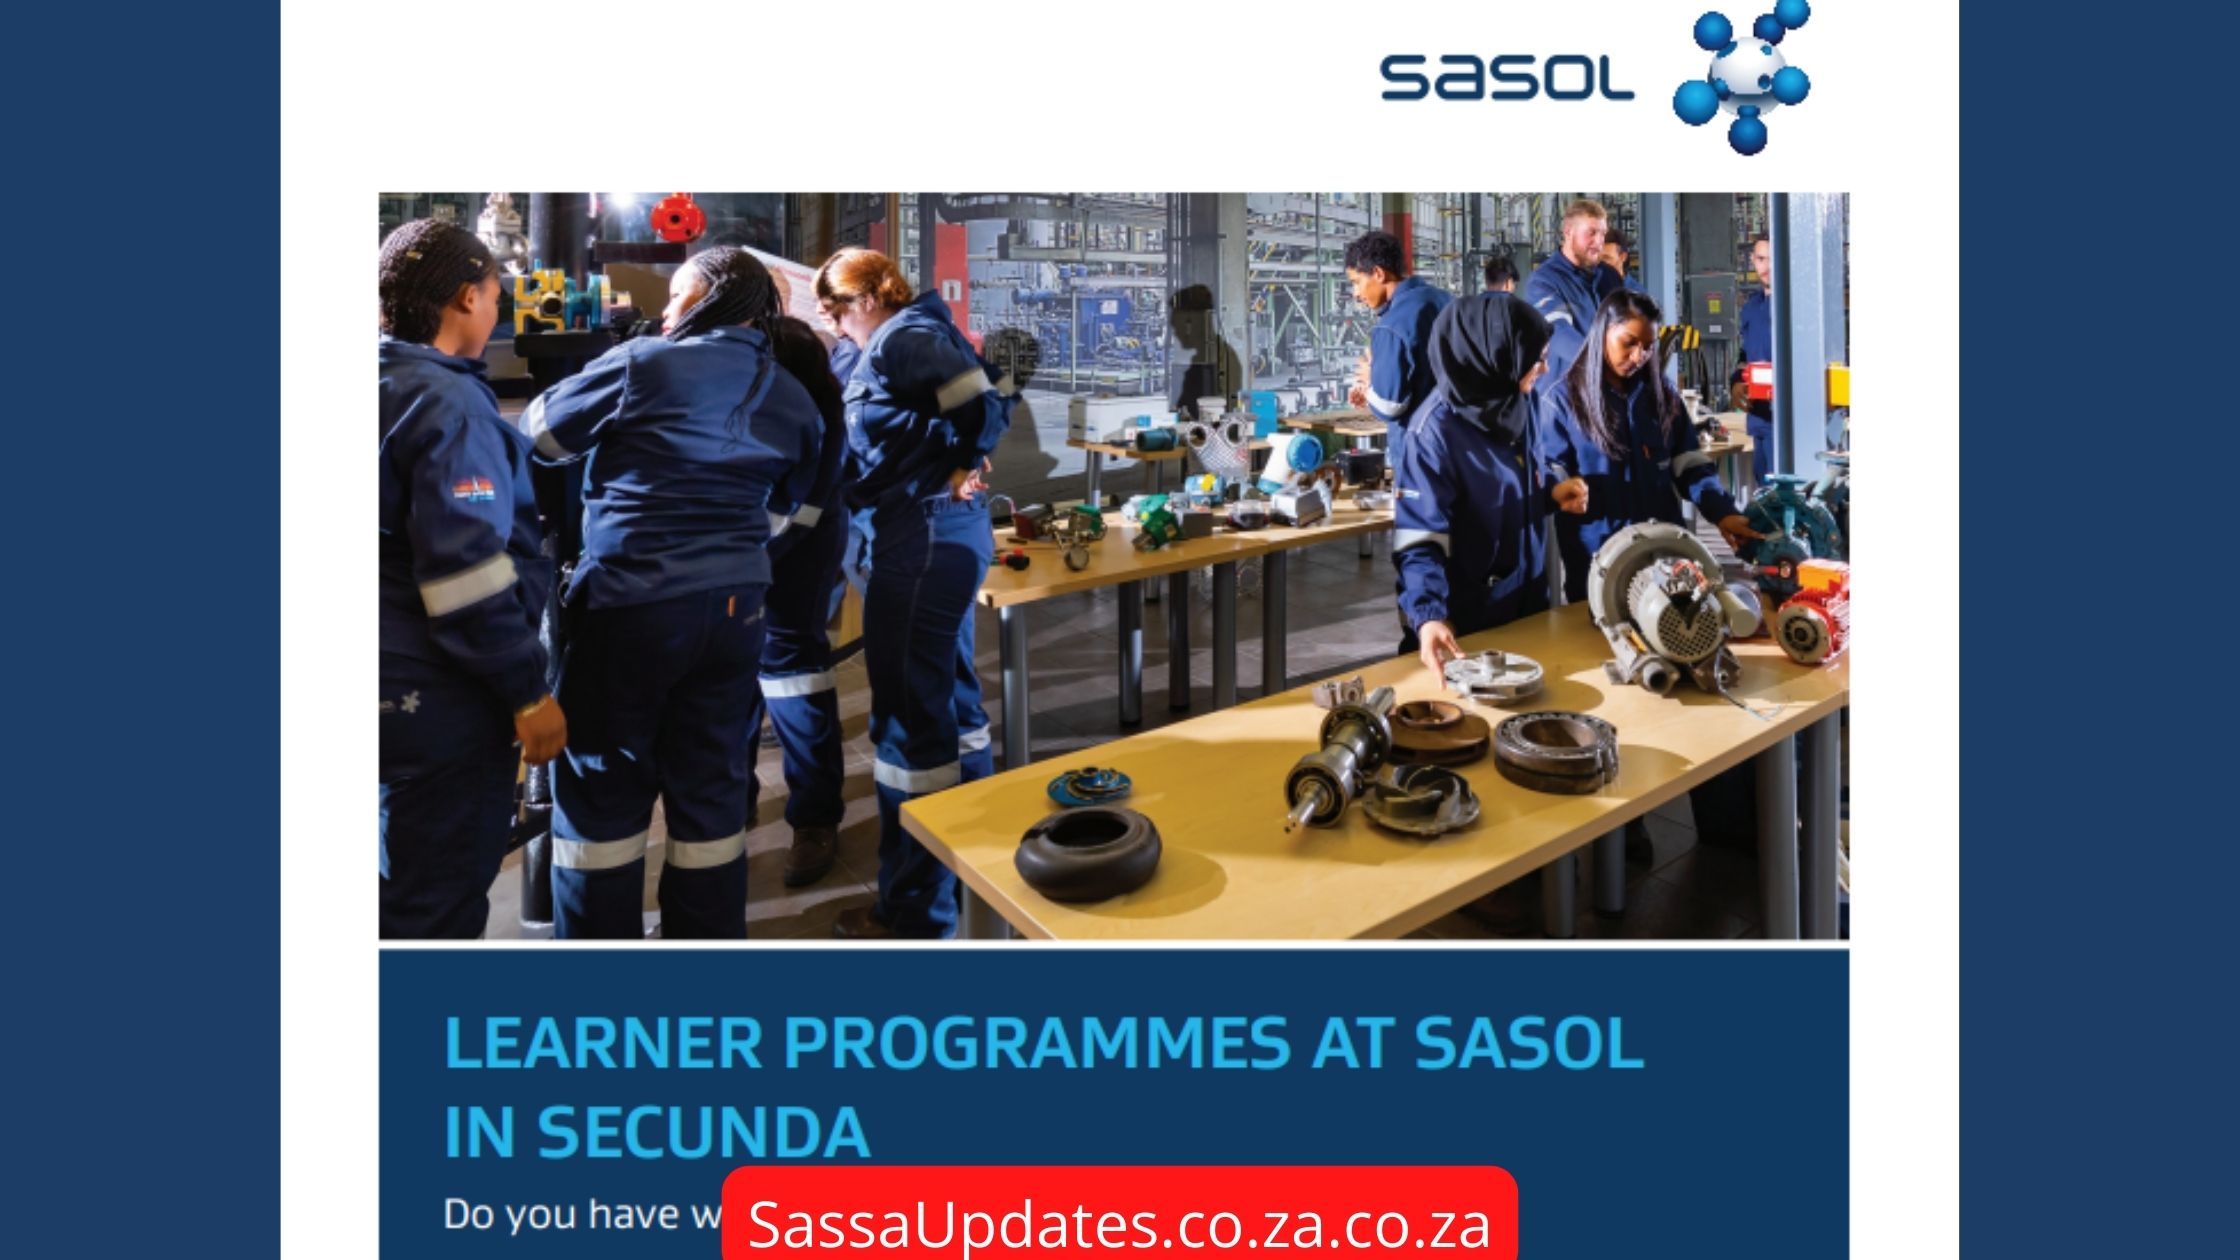 Sasol Learner Program at Secunda